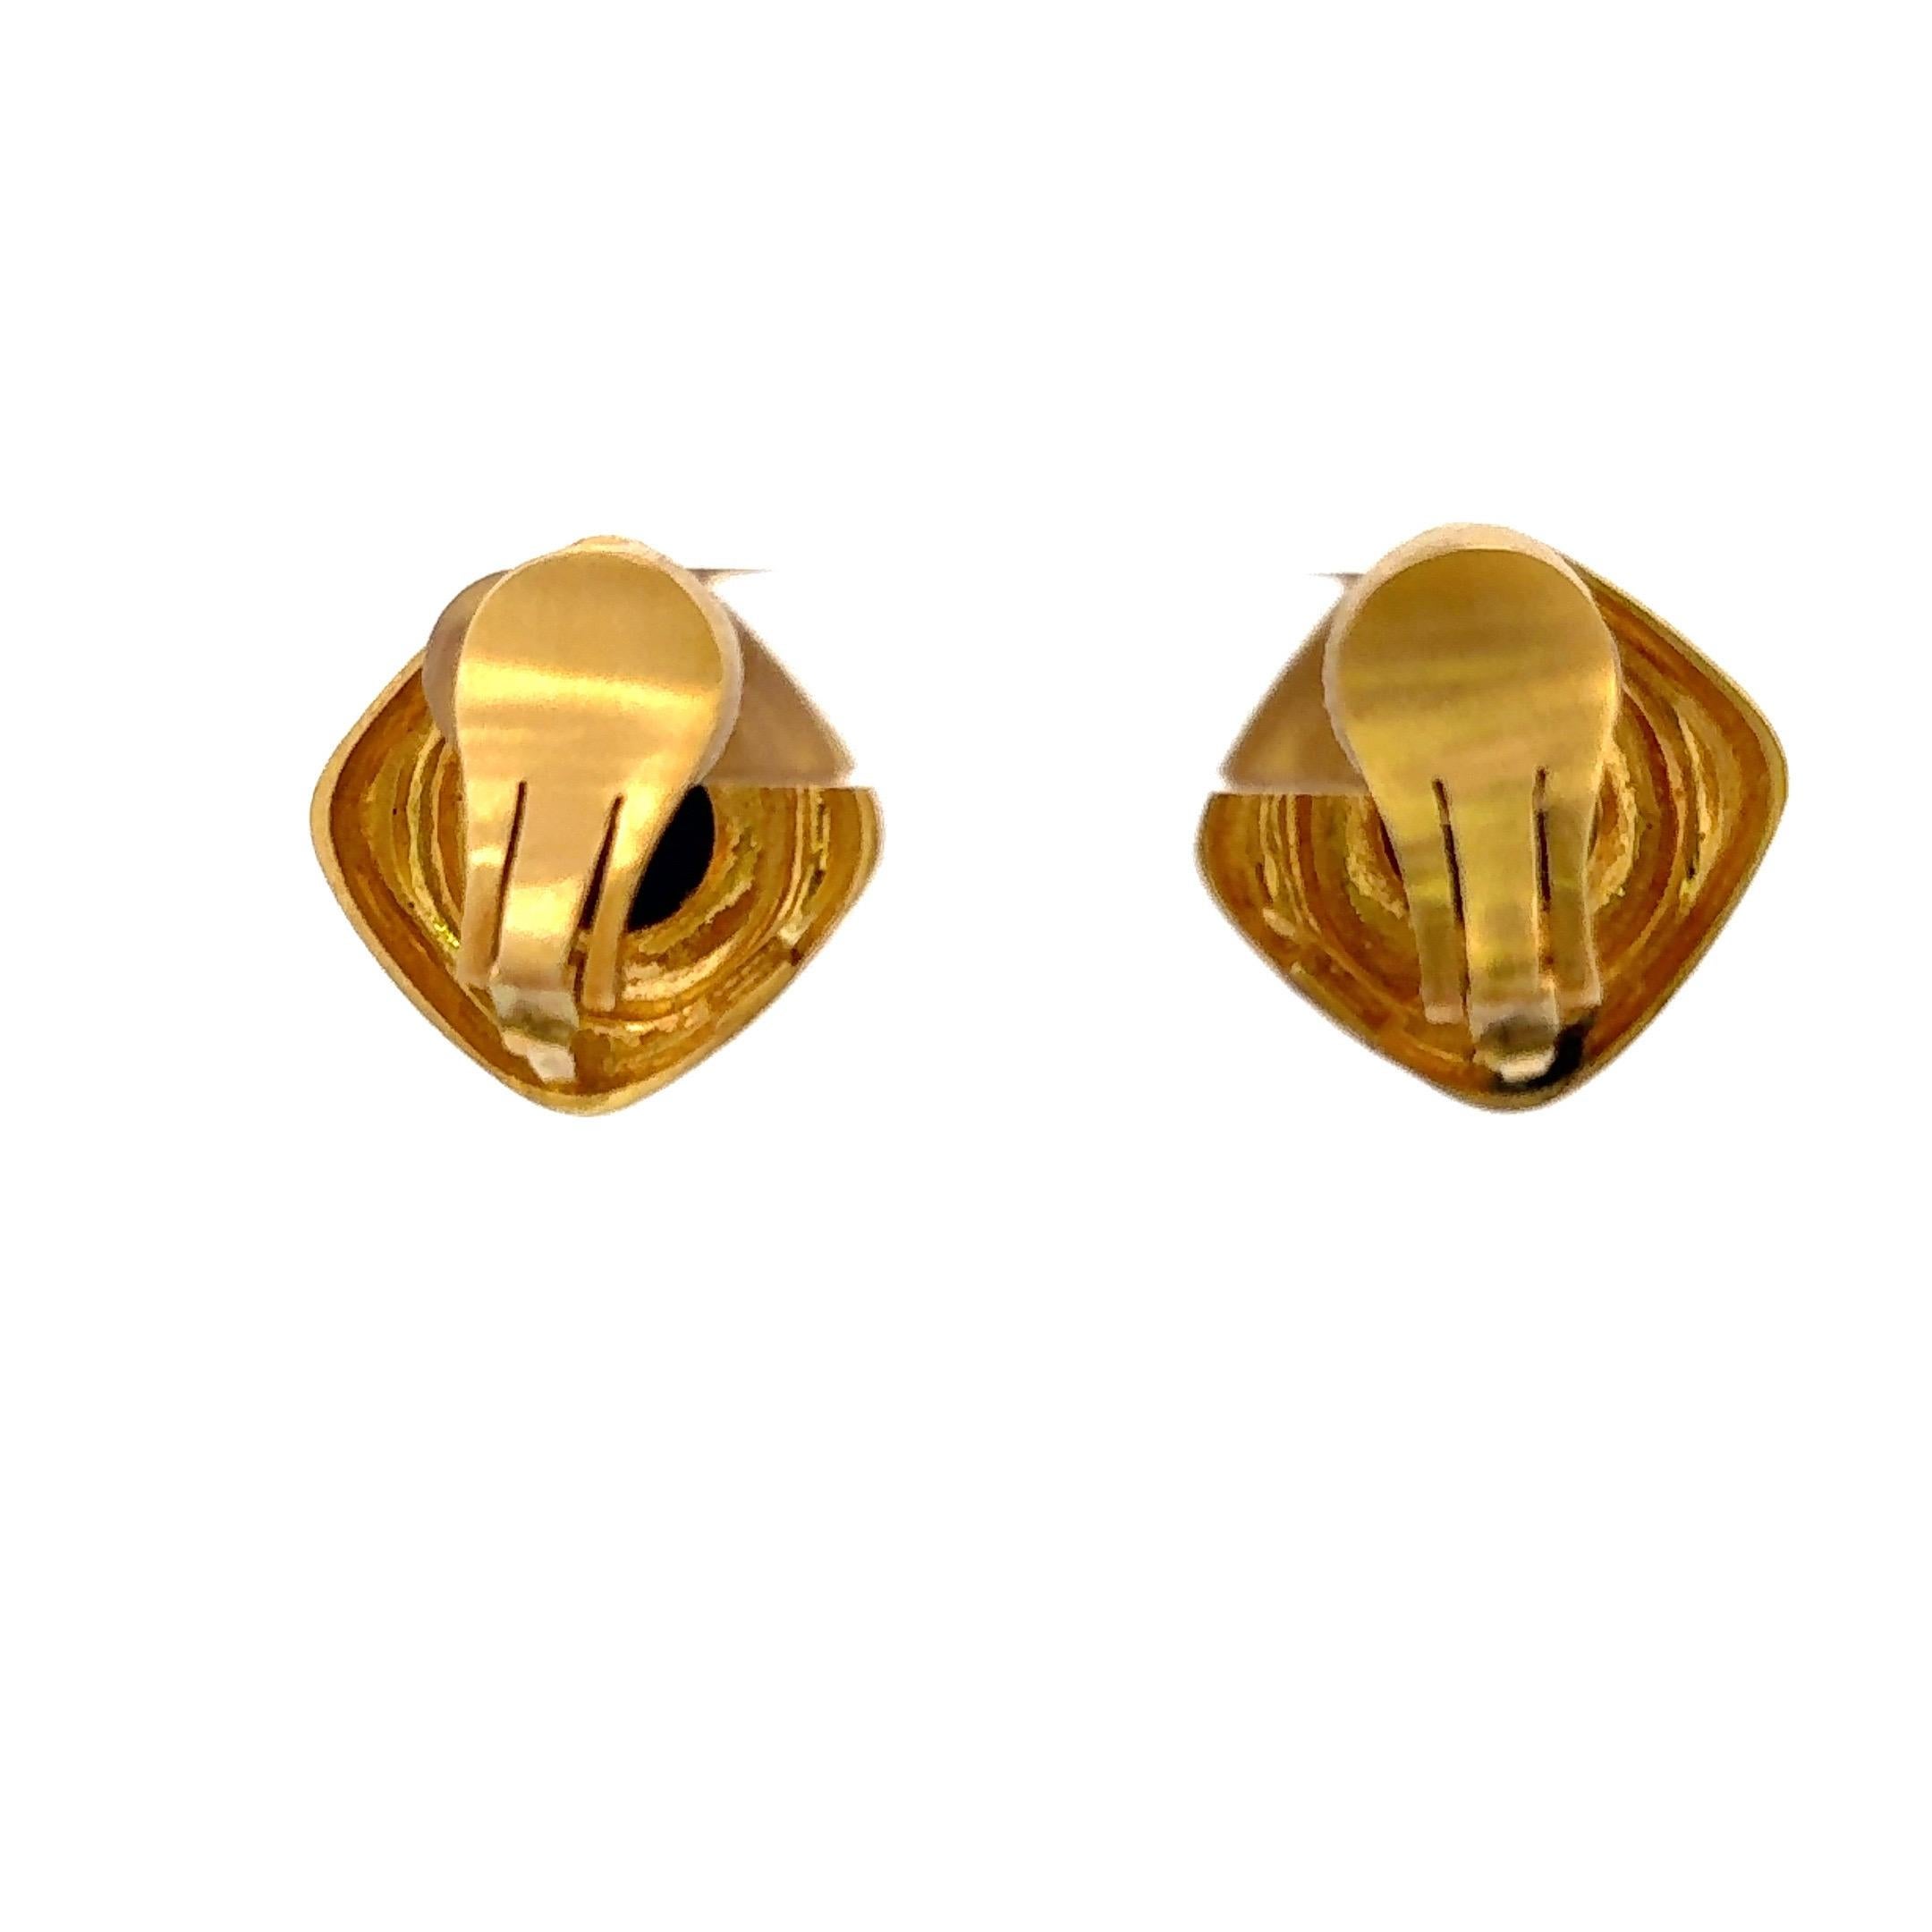 Zolotas Lapis Clip On Stud Earrings 22 Karat Yellow Gold 21.6 Grams For Sale 1